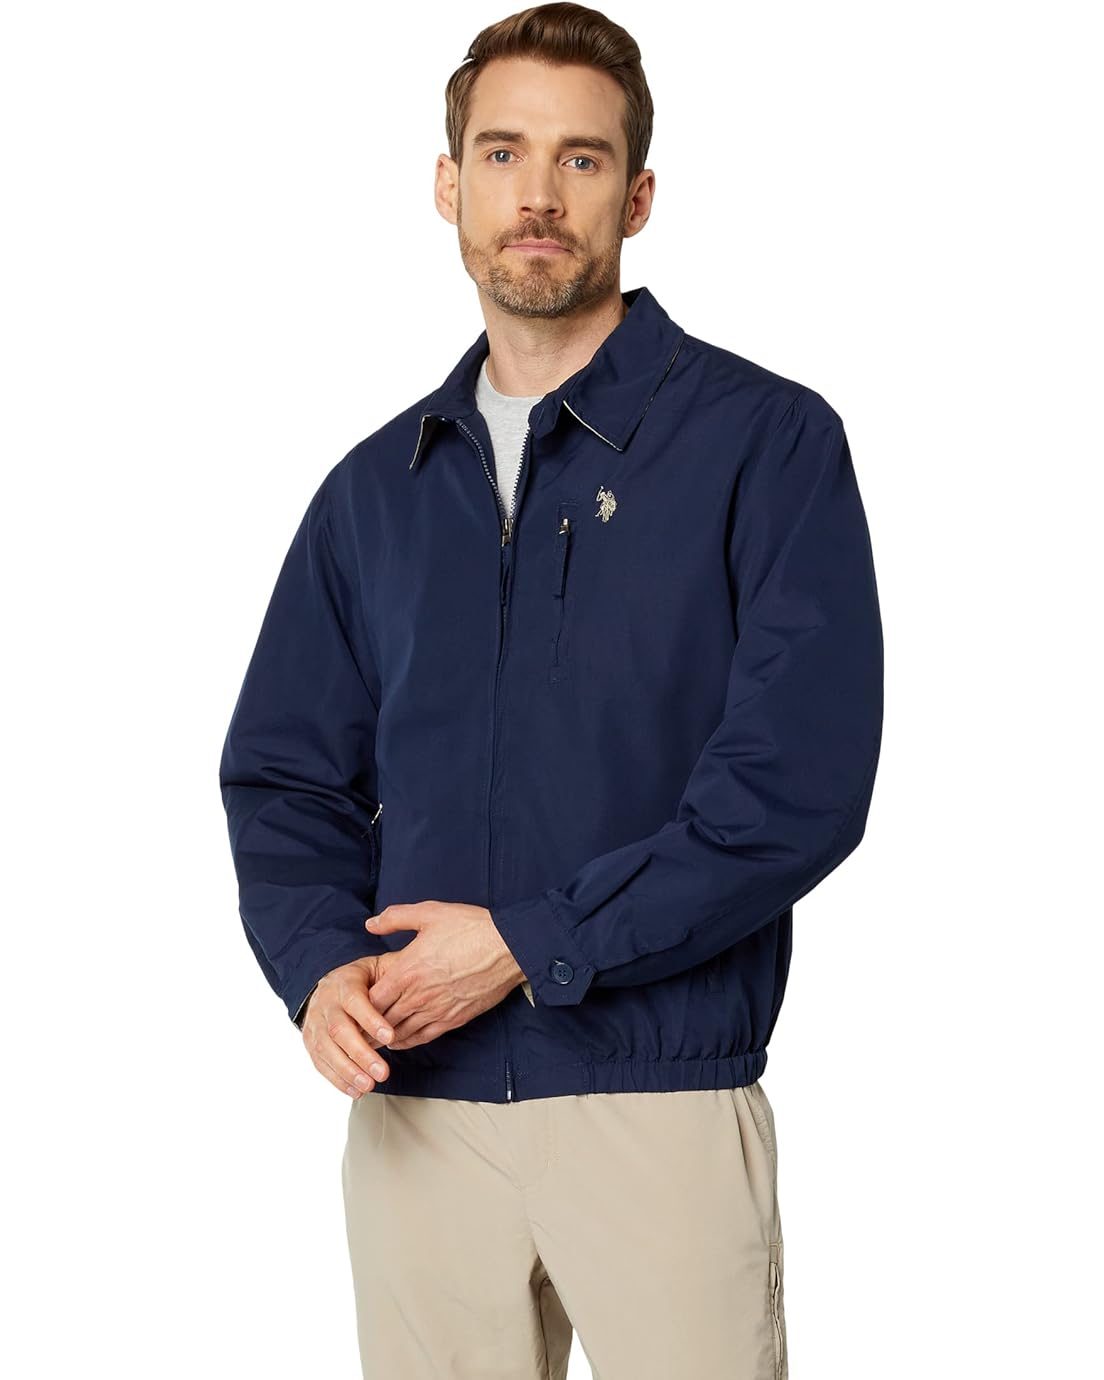 U.S. POLO ASSN. Micro Golf Jacket